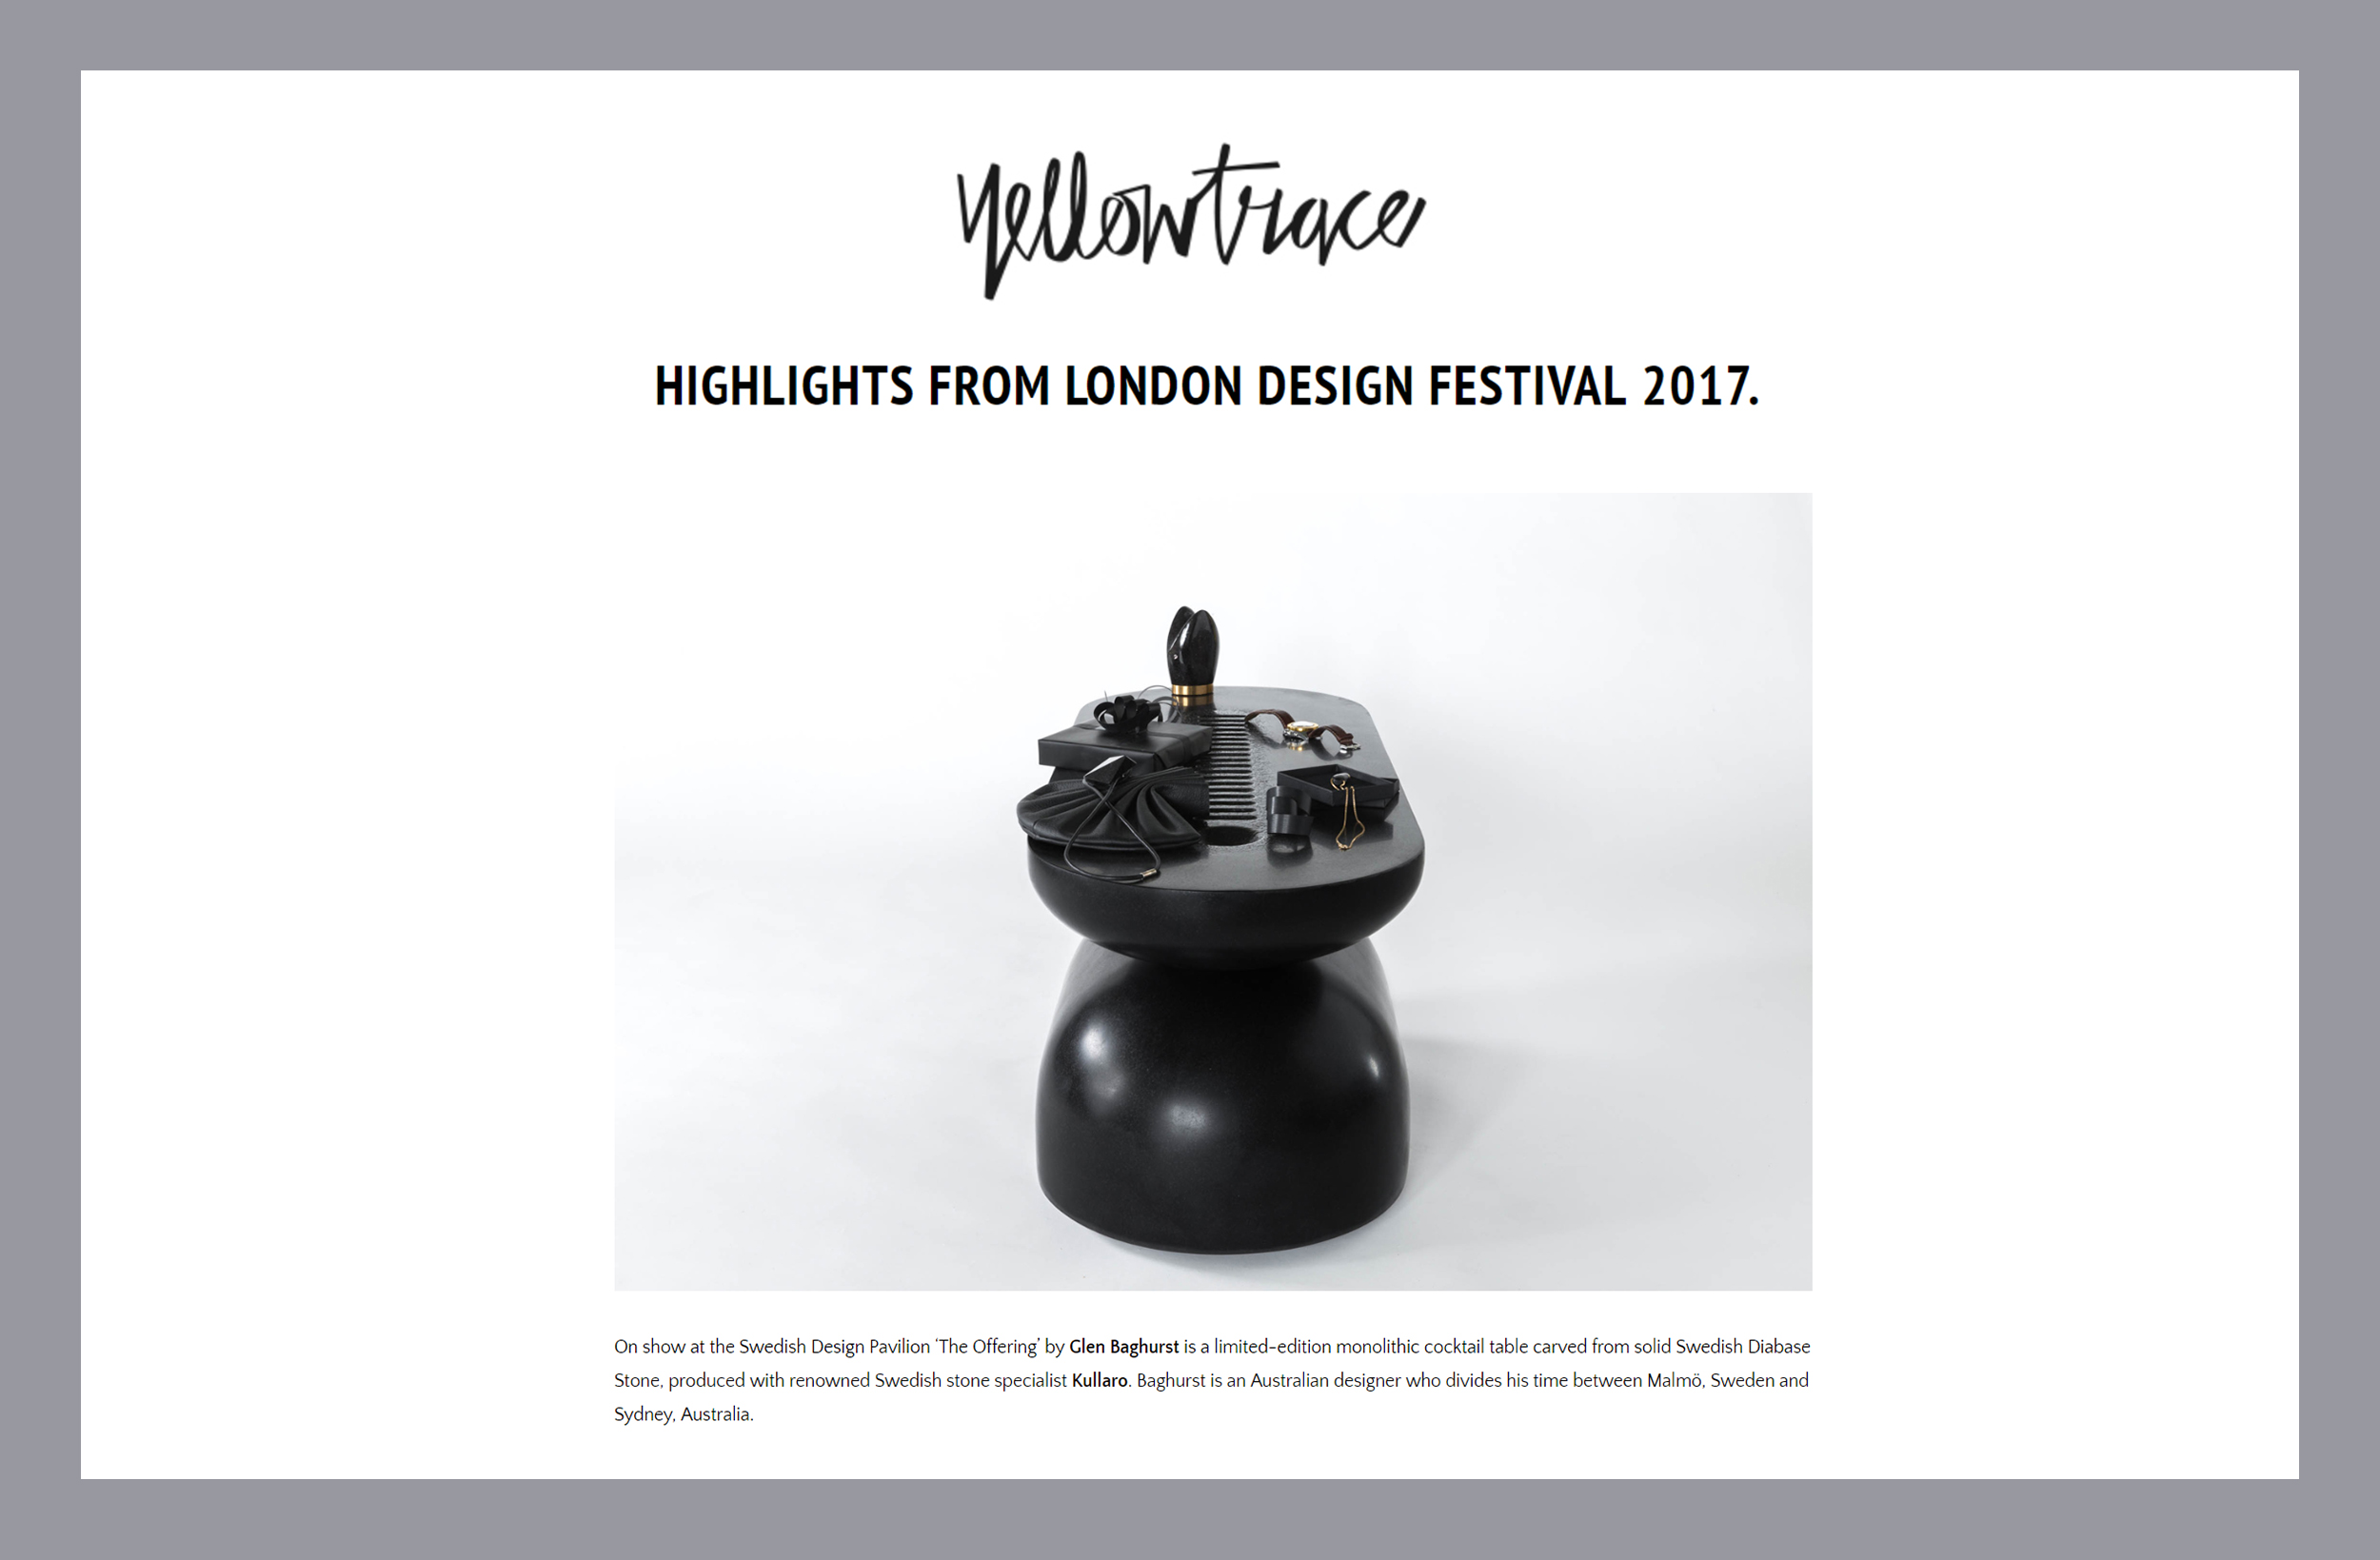 Yellowtrace London Design Festival HIghlights 2017